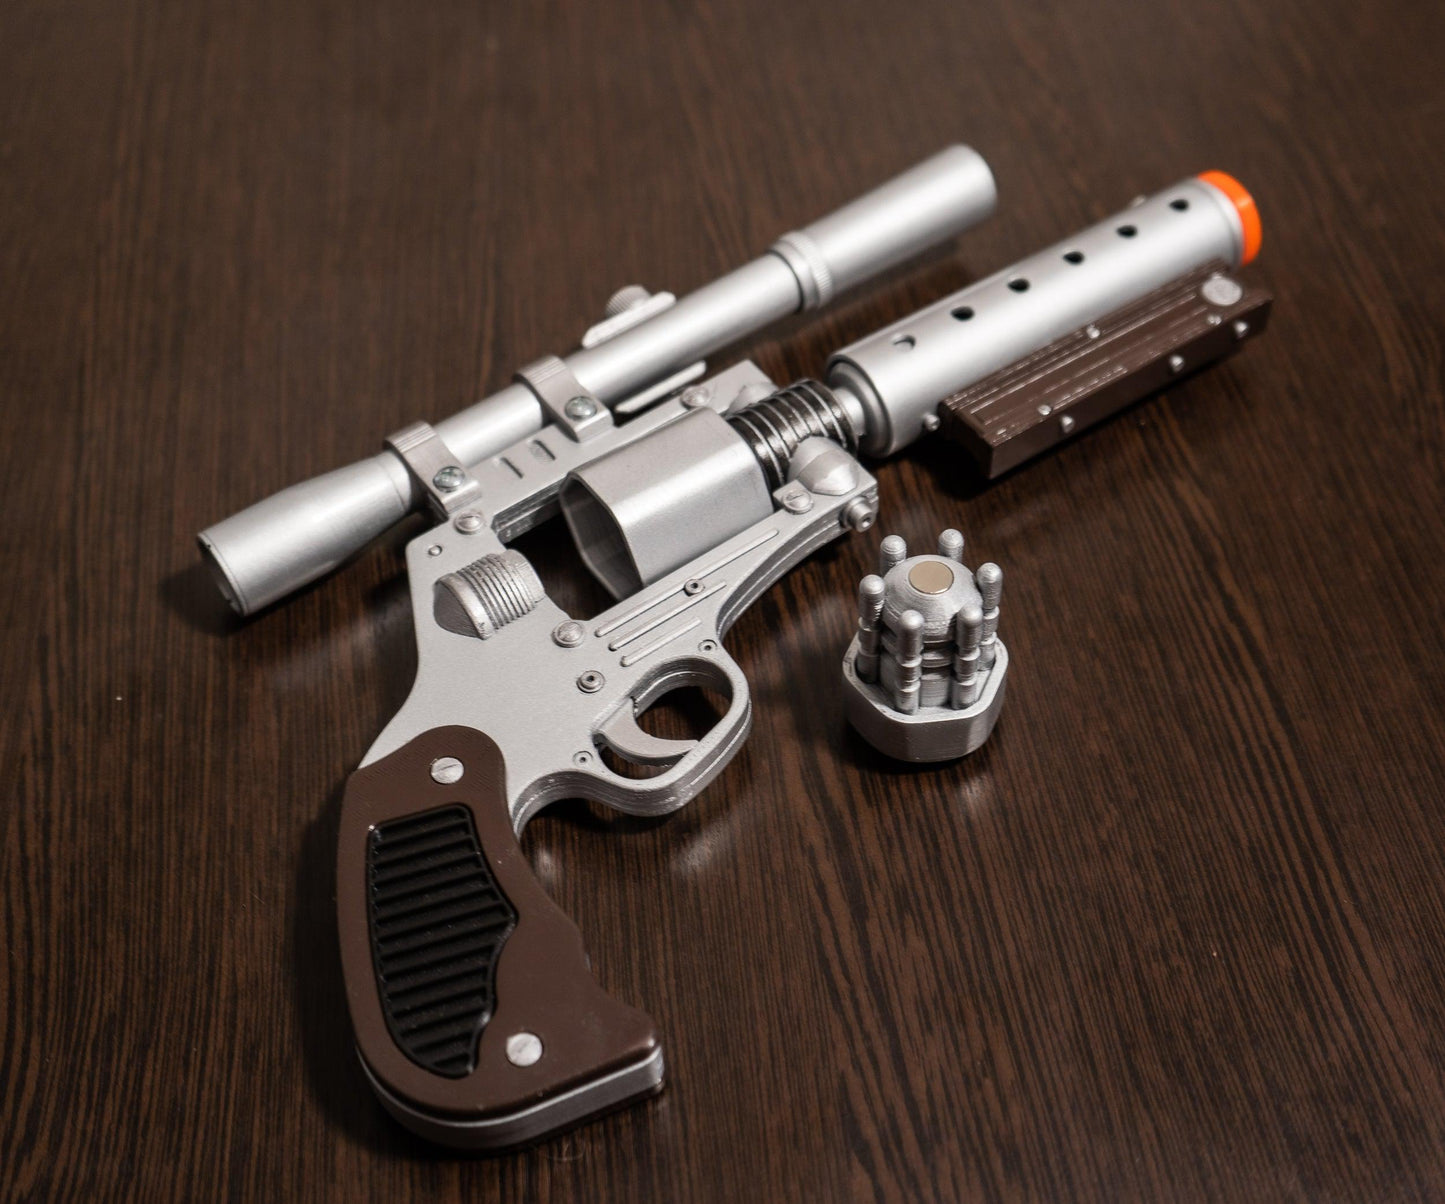 Tobias Beckett Blaster DG-29 | Star Wars Replica | Star Wars Props | Star Wars Cosplay - 3DPrintProps